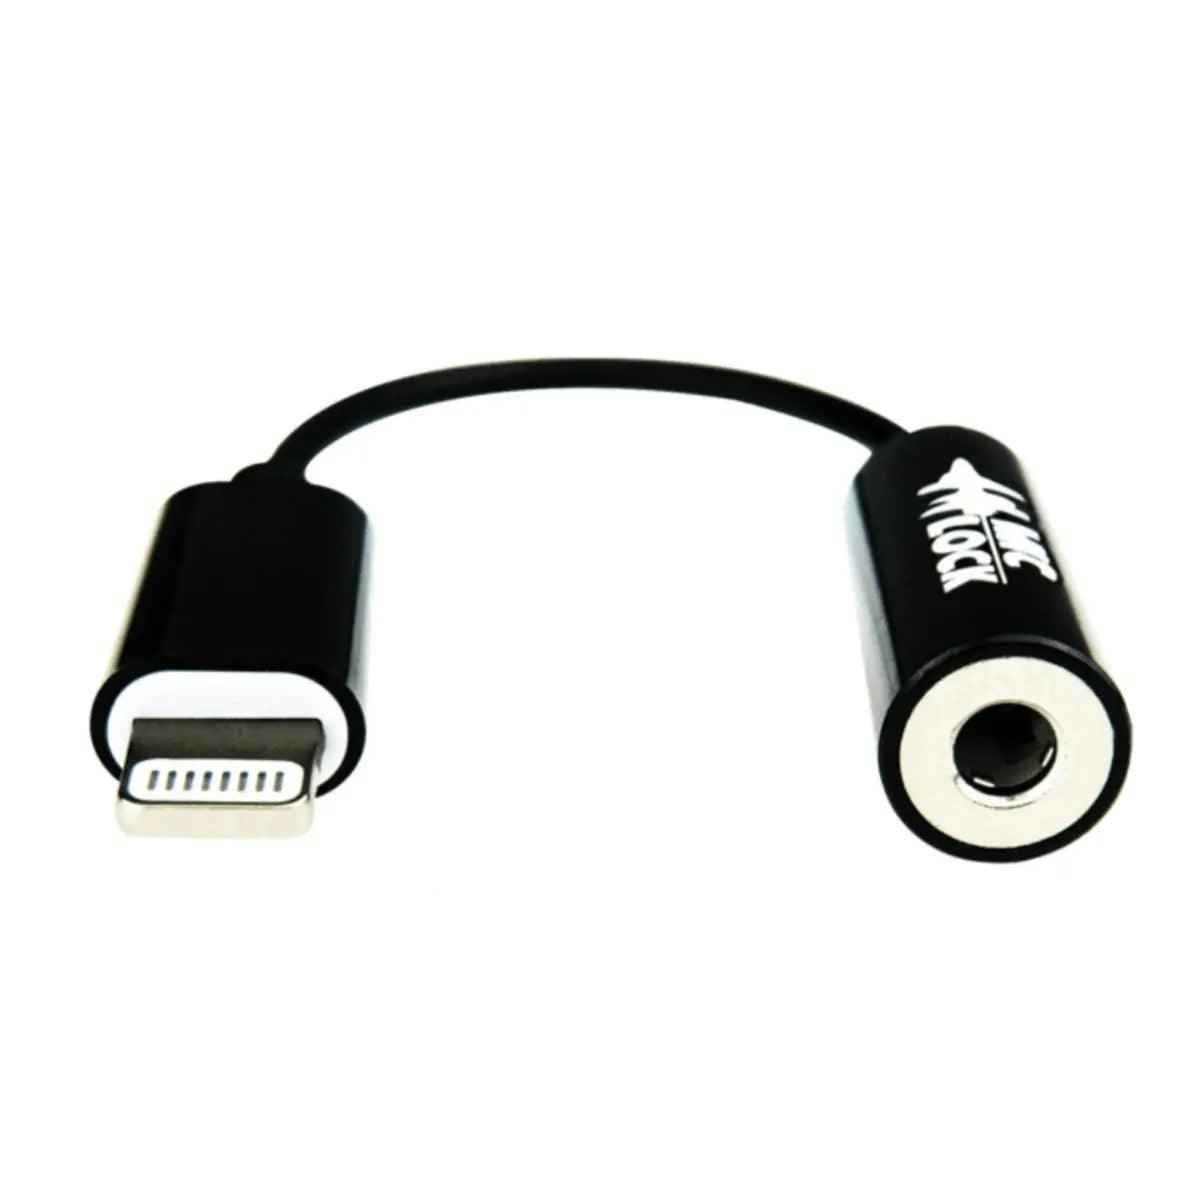 Mic-Lock Lightning Soundpass Microphone Blocker - Black - Mic-Lock